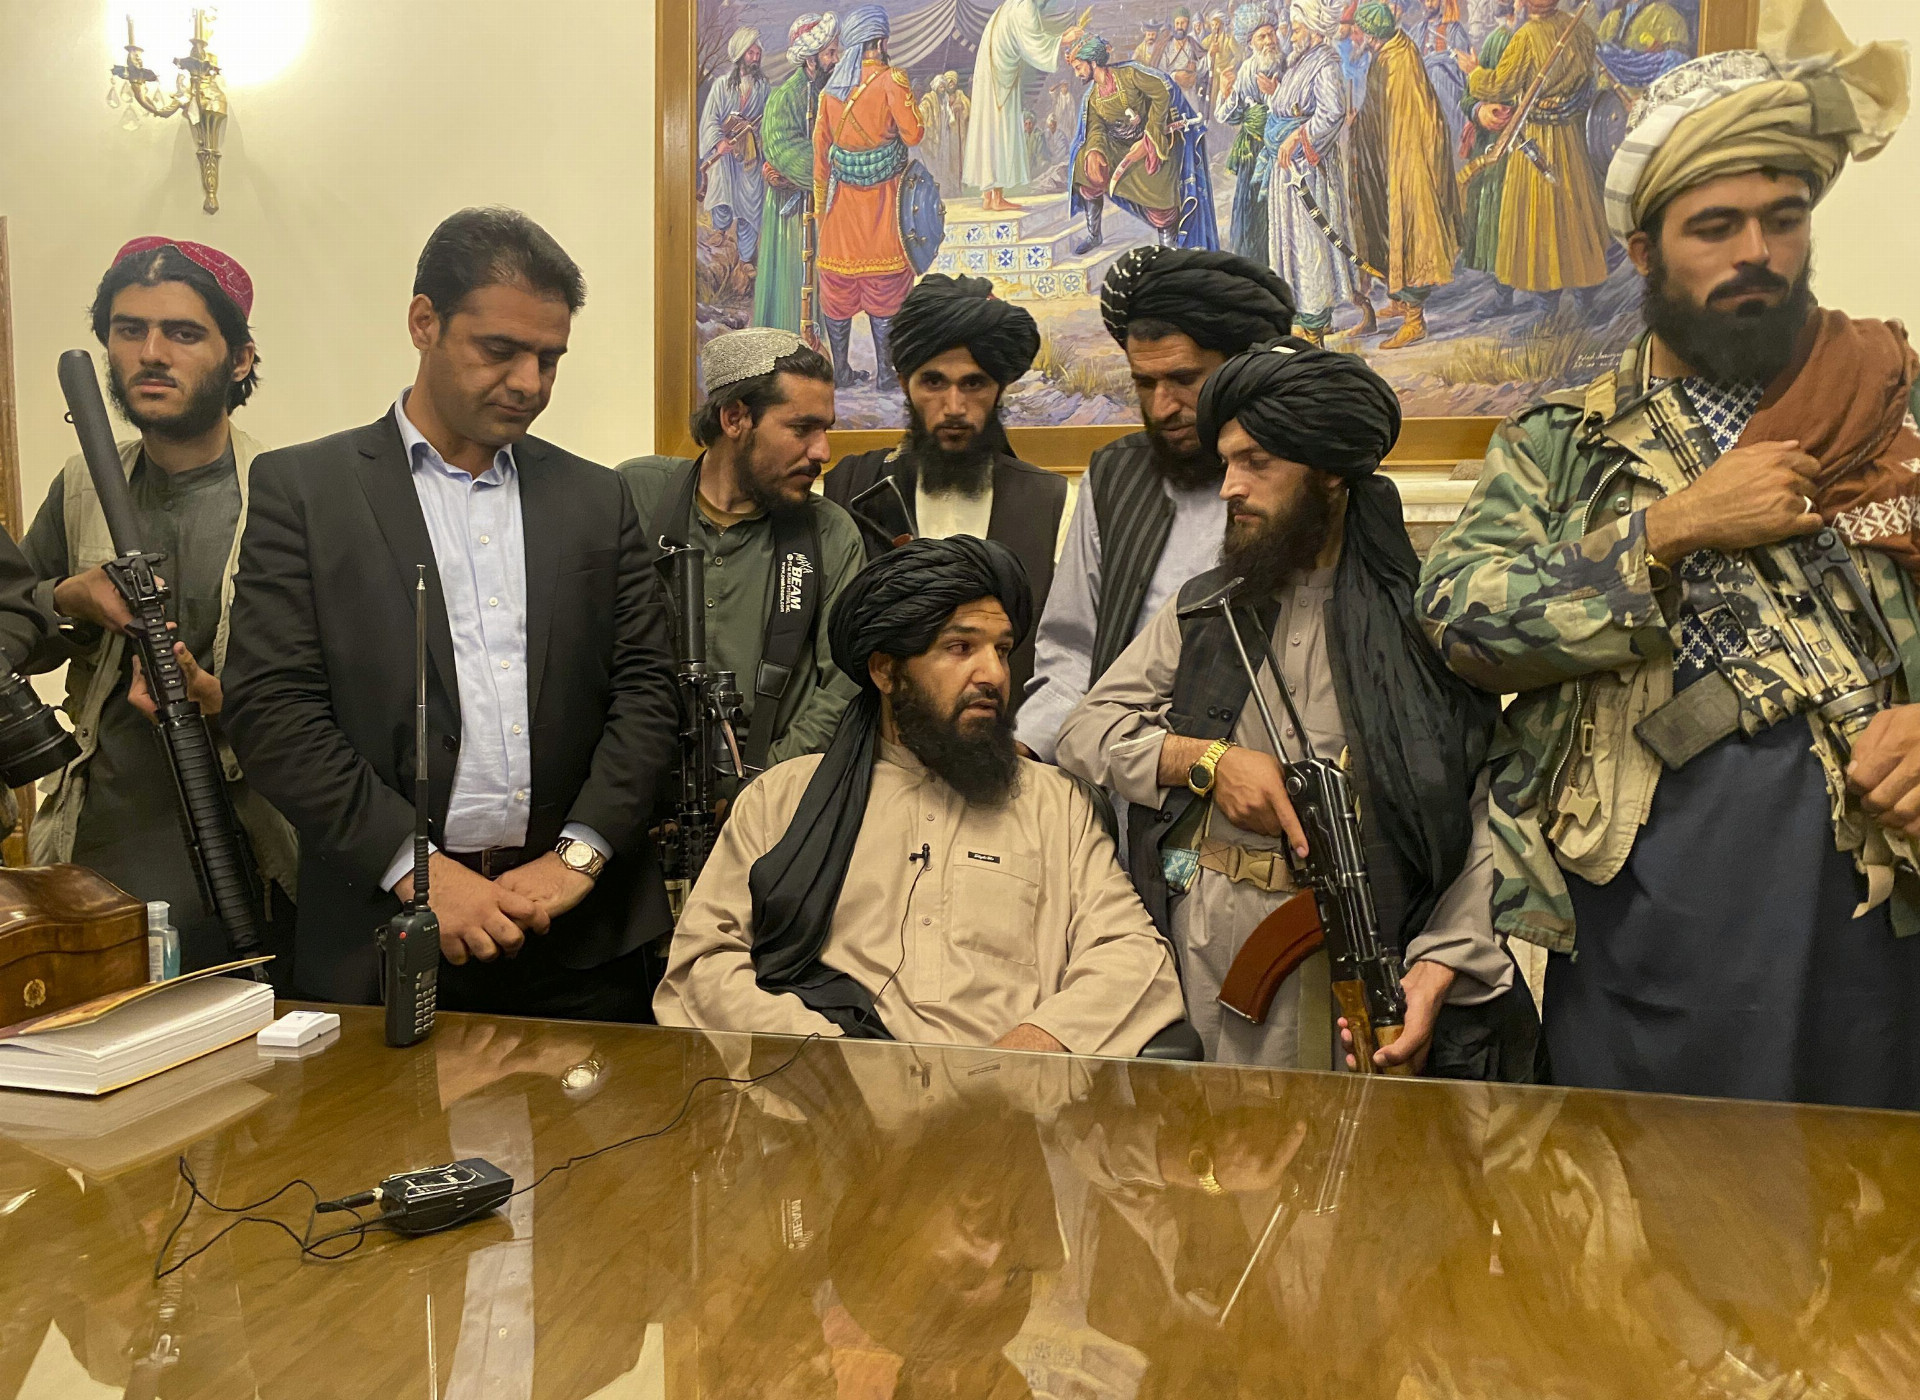  Bojovníci islamistického hnutia Taliban obsadili prezidentský palác po odchode afganského prezidenta Ašrafa Ghaního z krajiny, 15. augusta 2021 v Kábule. 